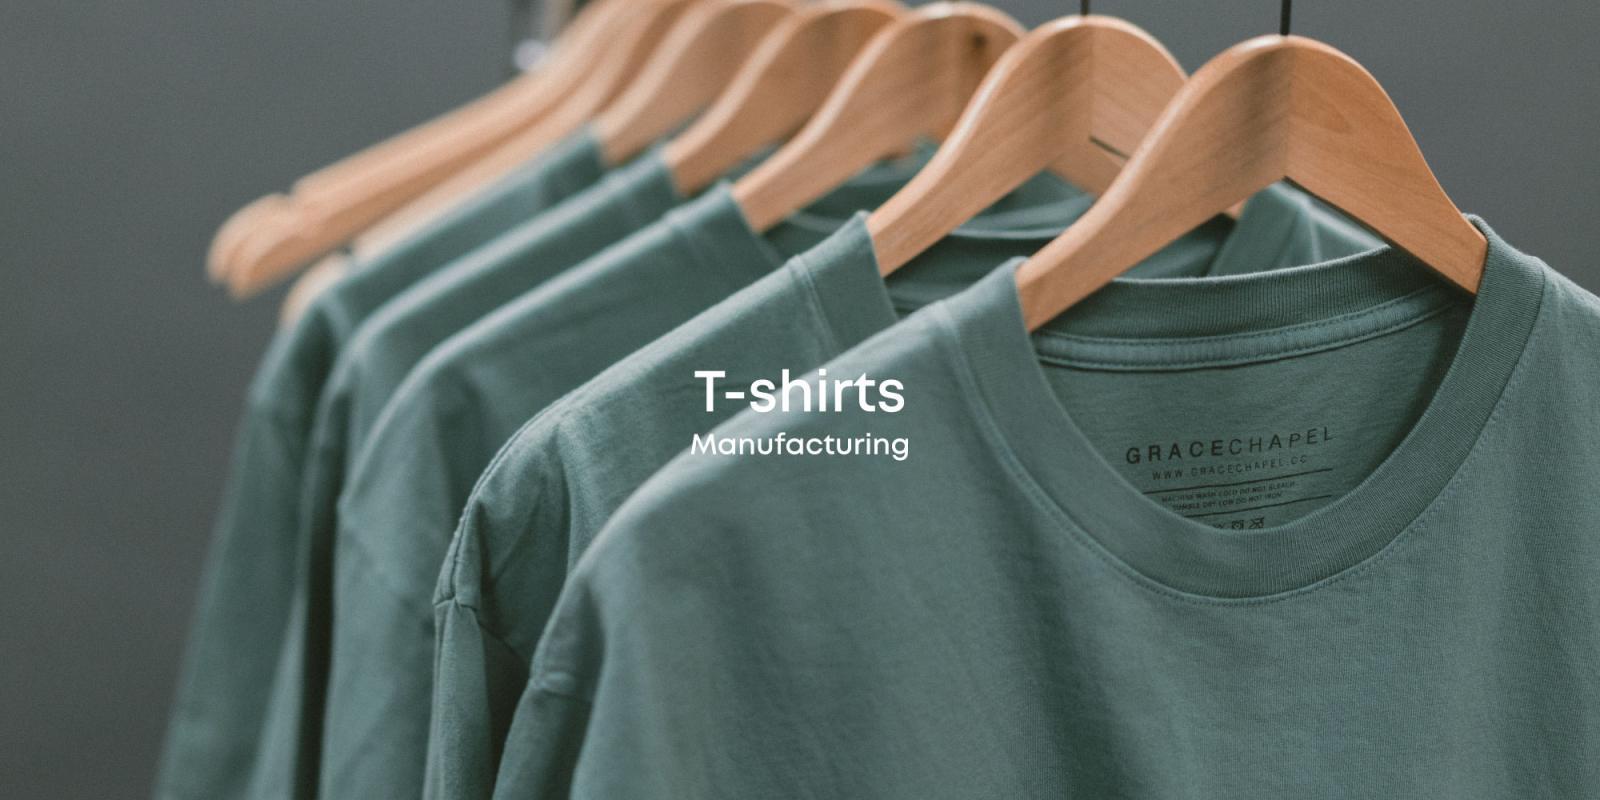 T-shirts Manufacturing